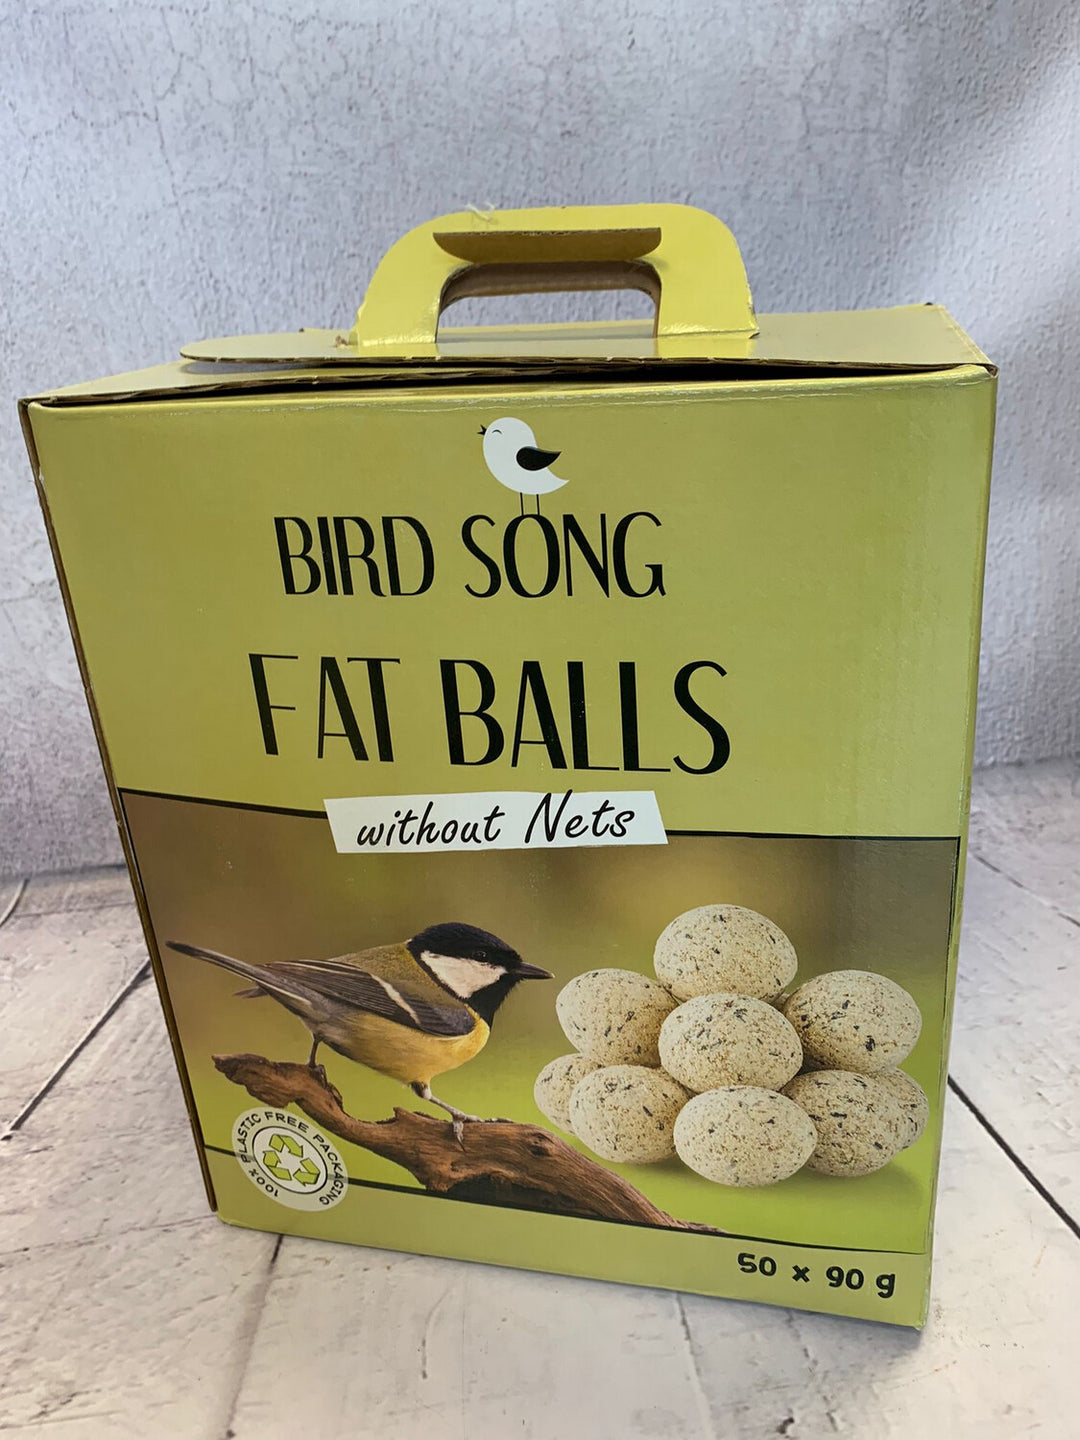 Wild bird Fat balls 50 in Box